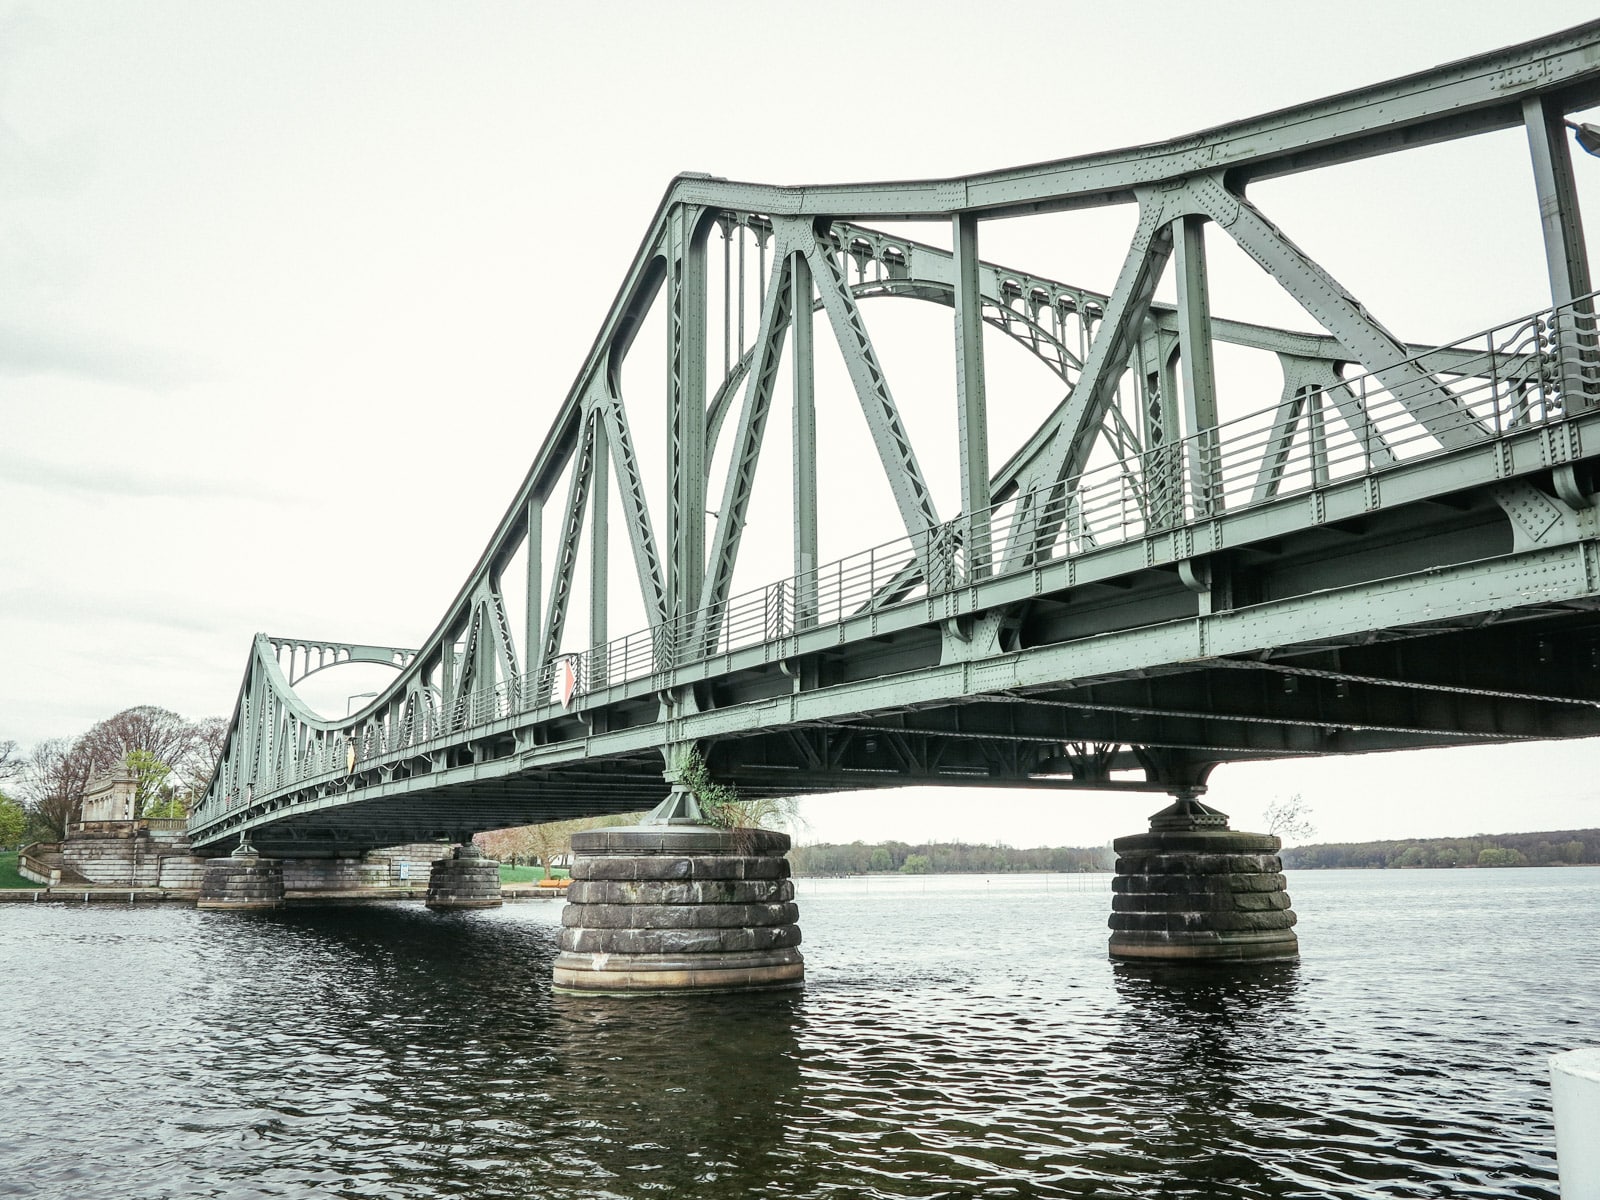 The Glienicke Brücke - the Bridge of Spies